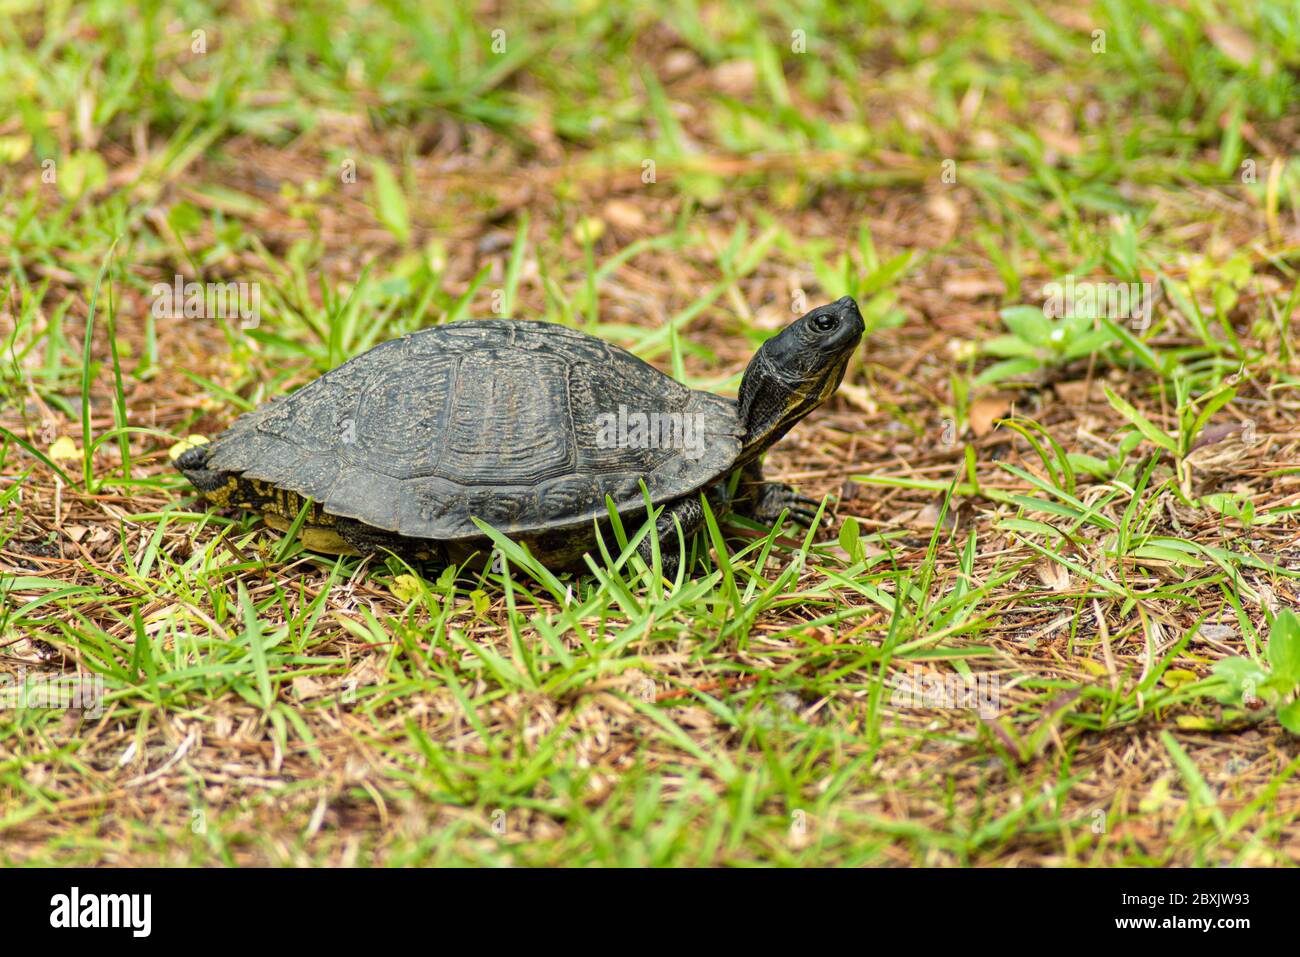 Yellow-bellied Slider Turtle Stockfoto